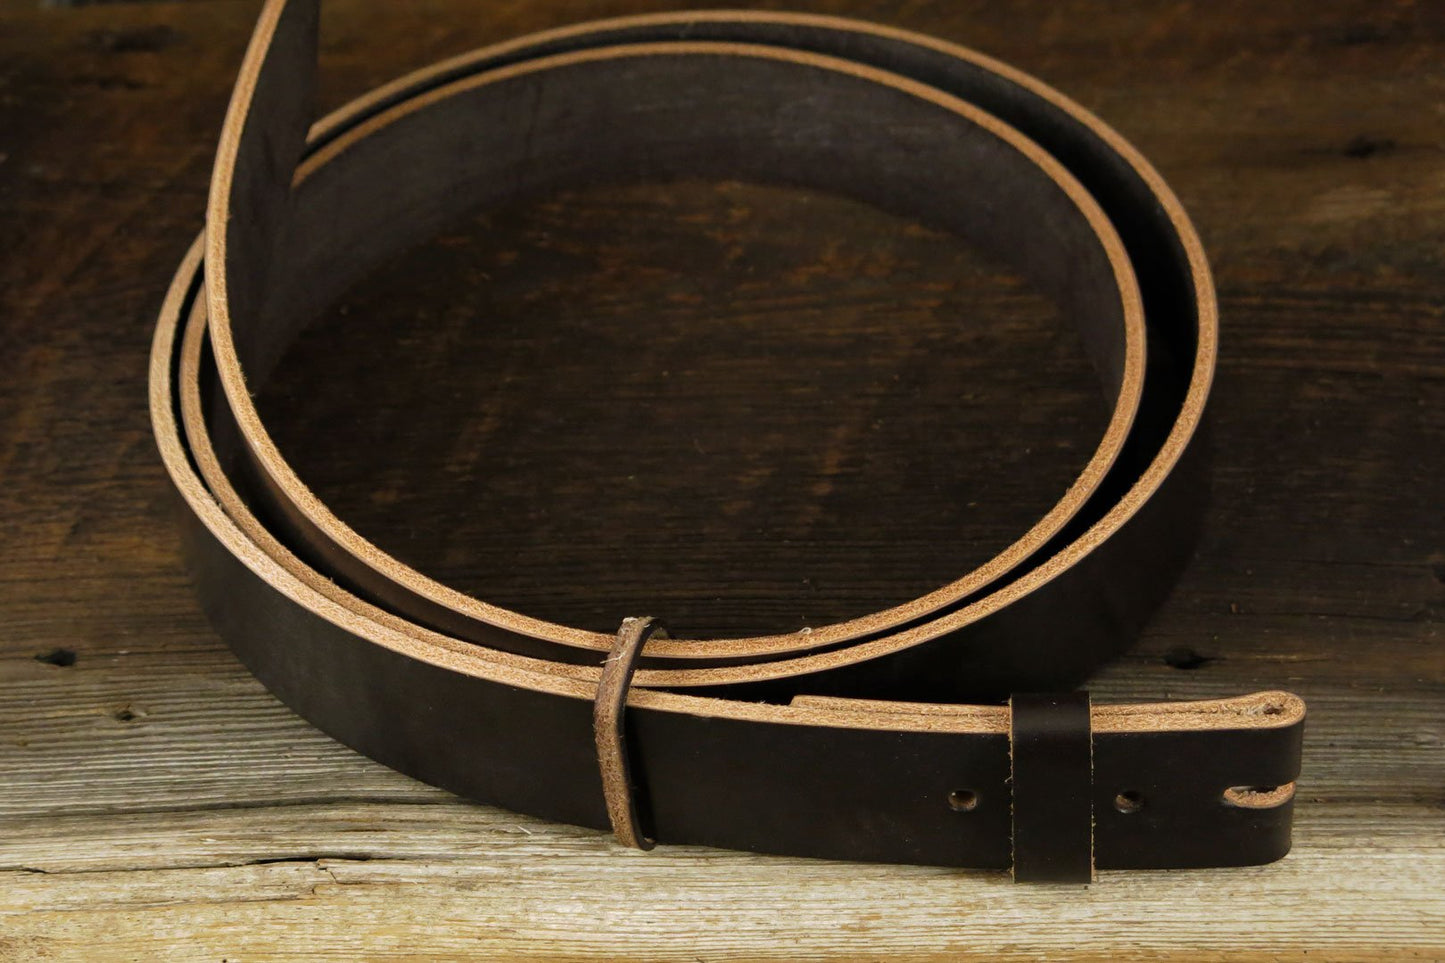 Sedgwick English Bridle Leather - Traditional